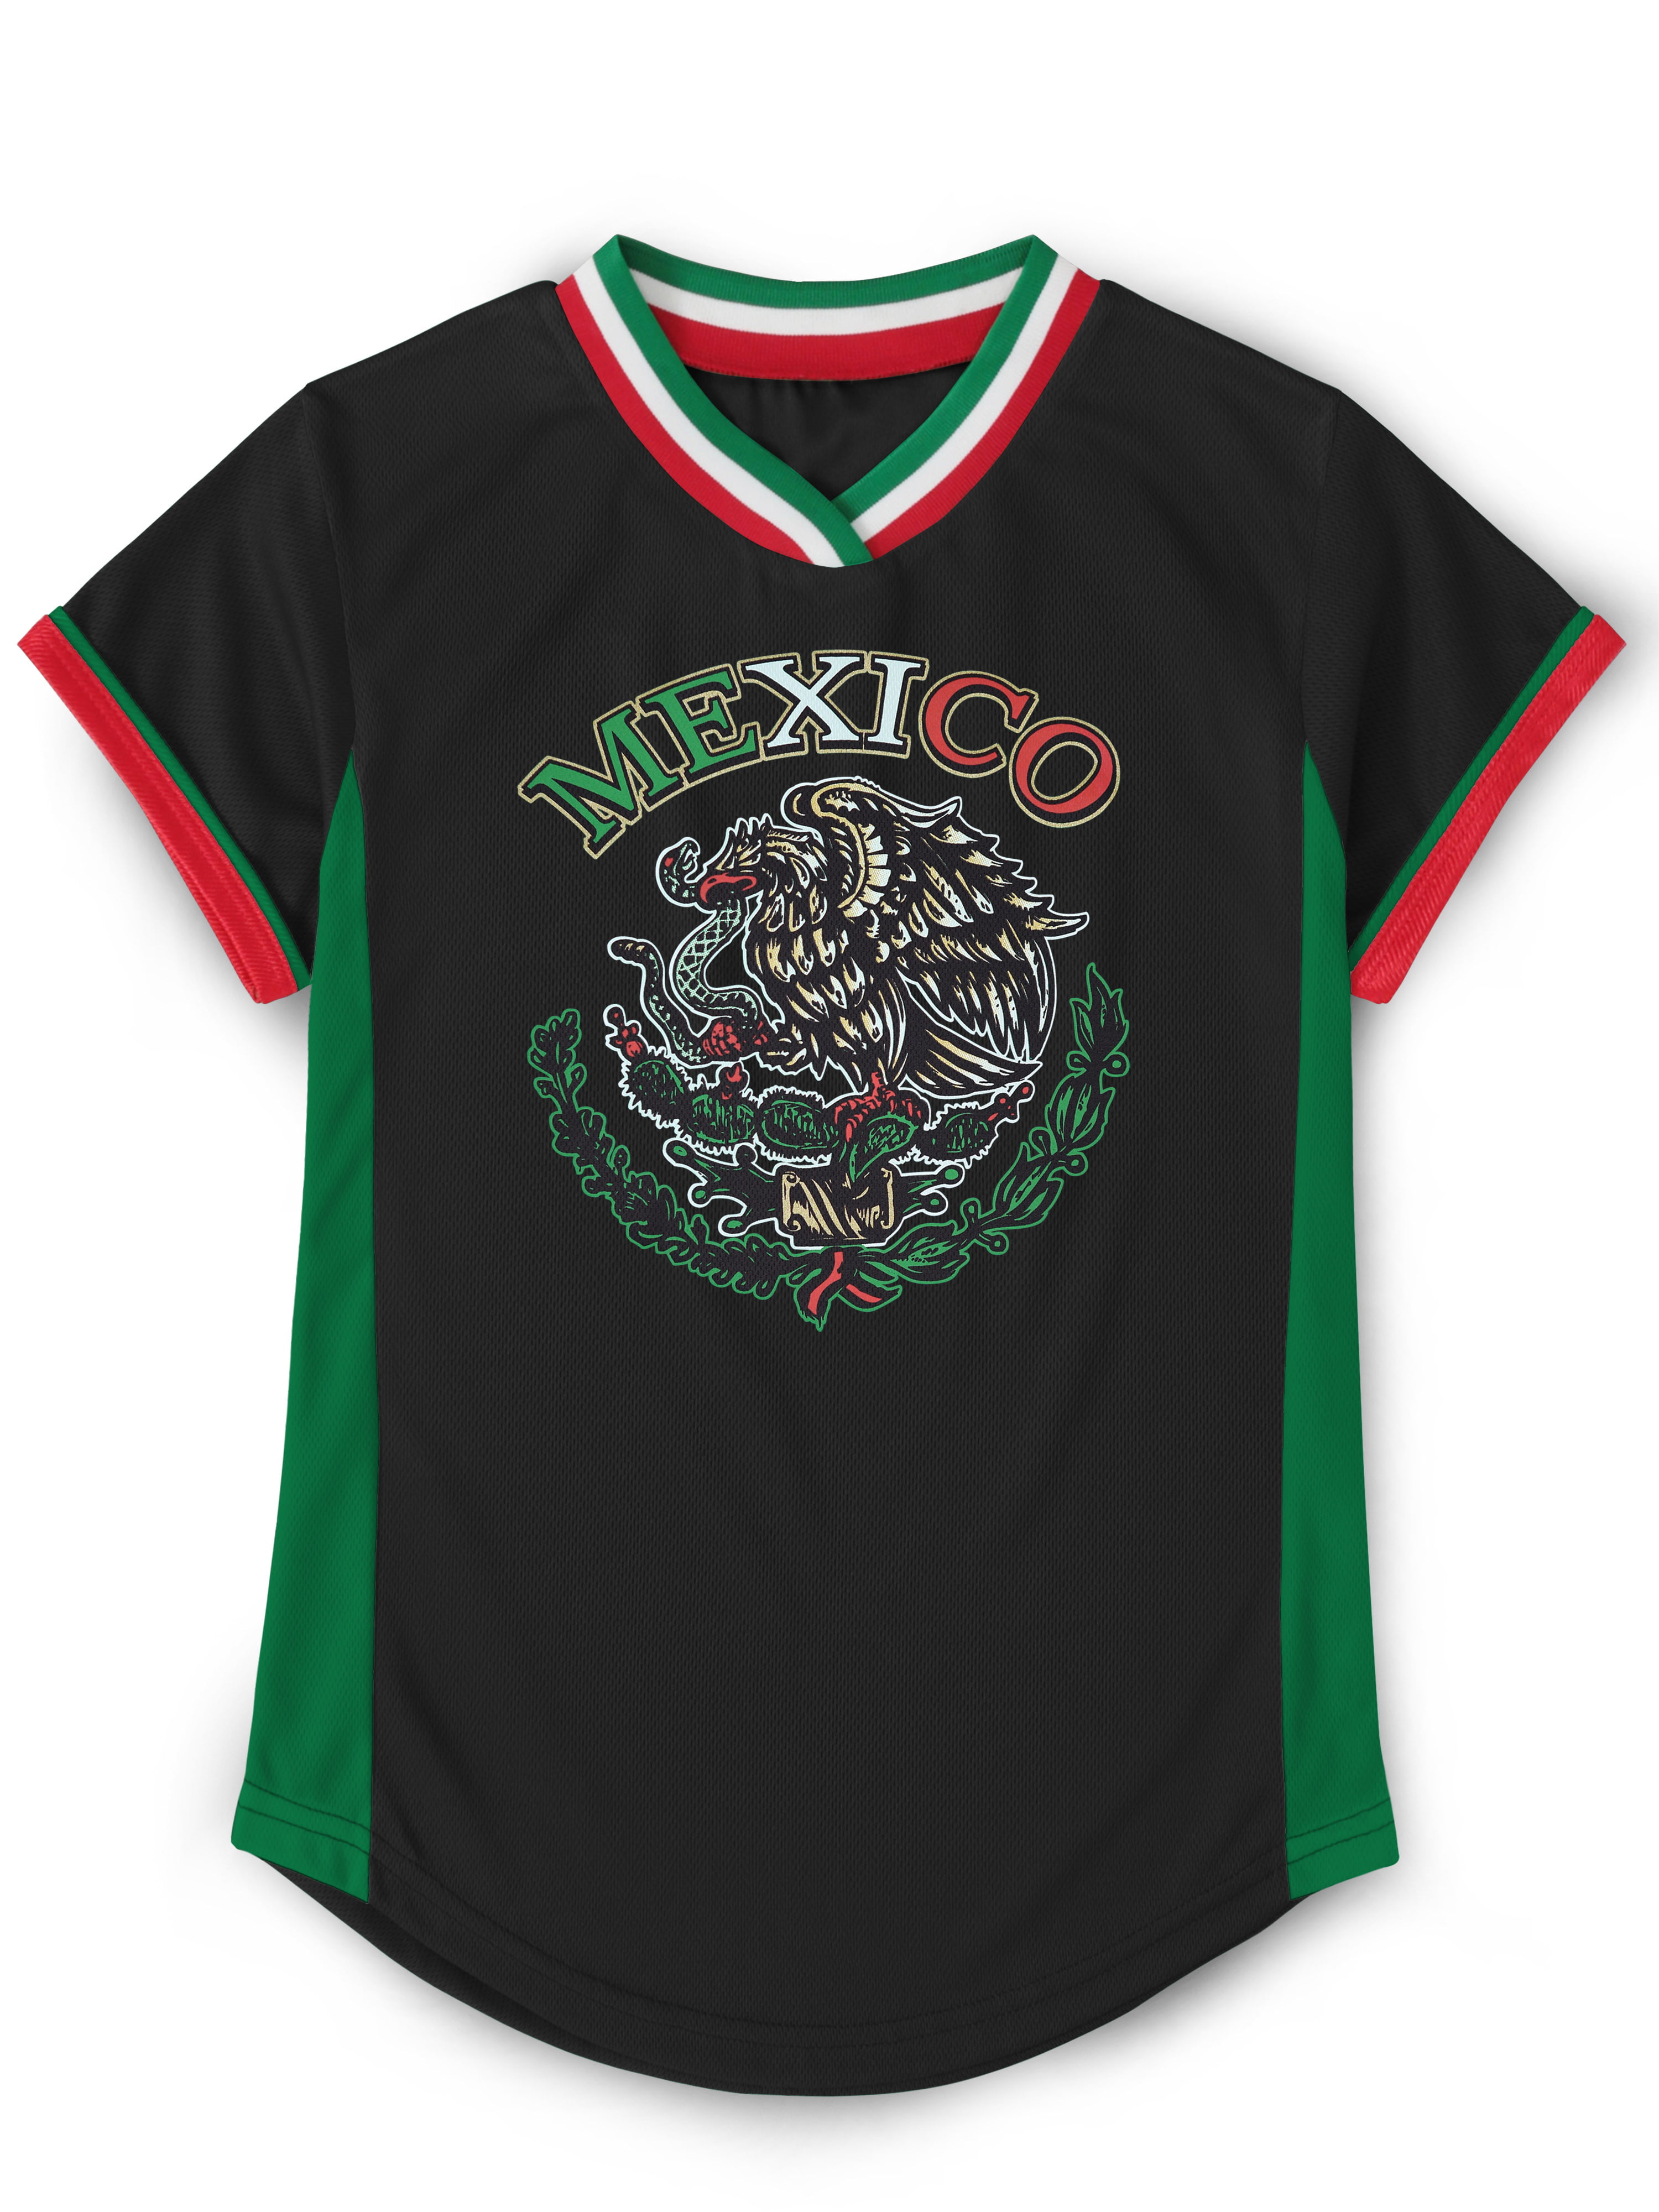 women's mexico soccer jersey